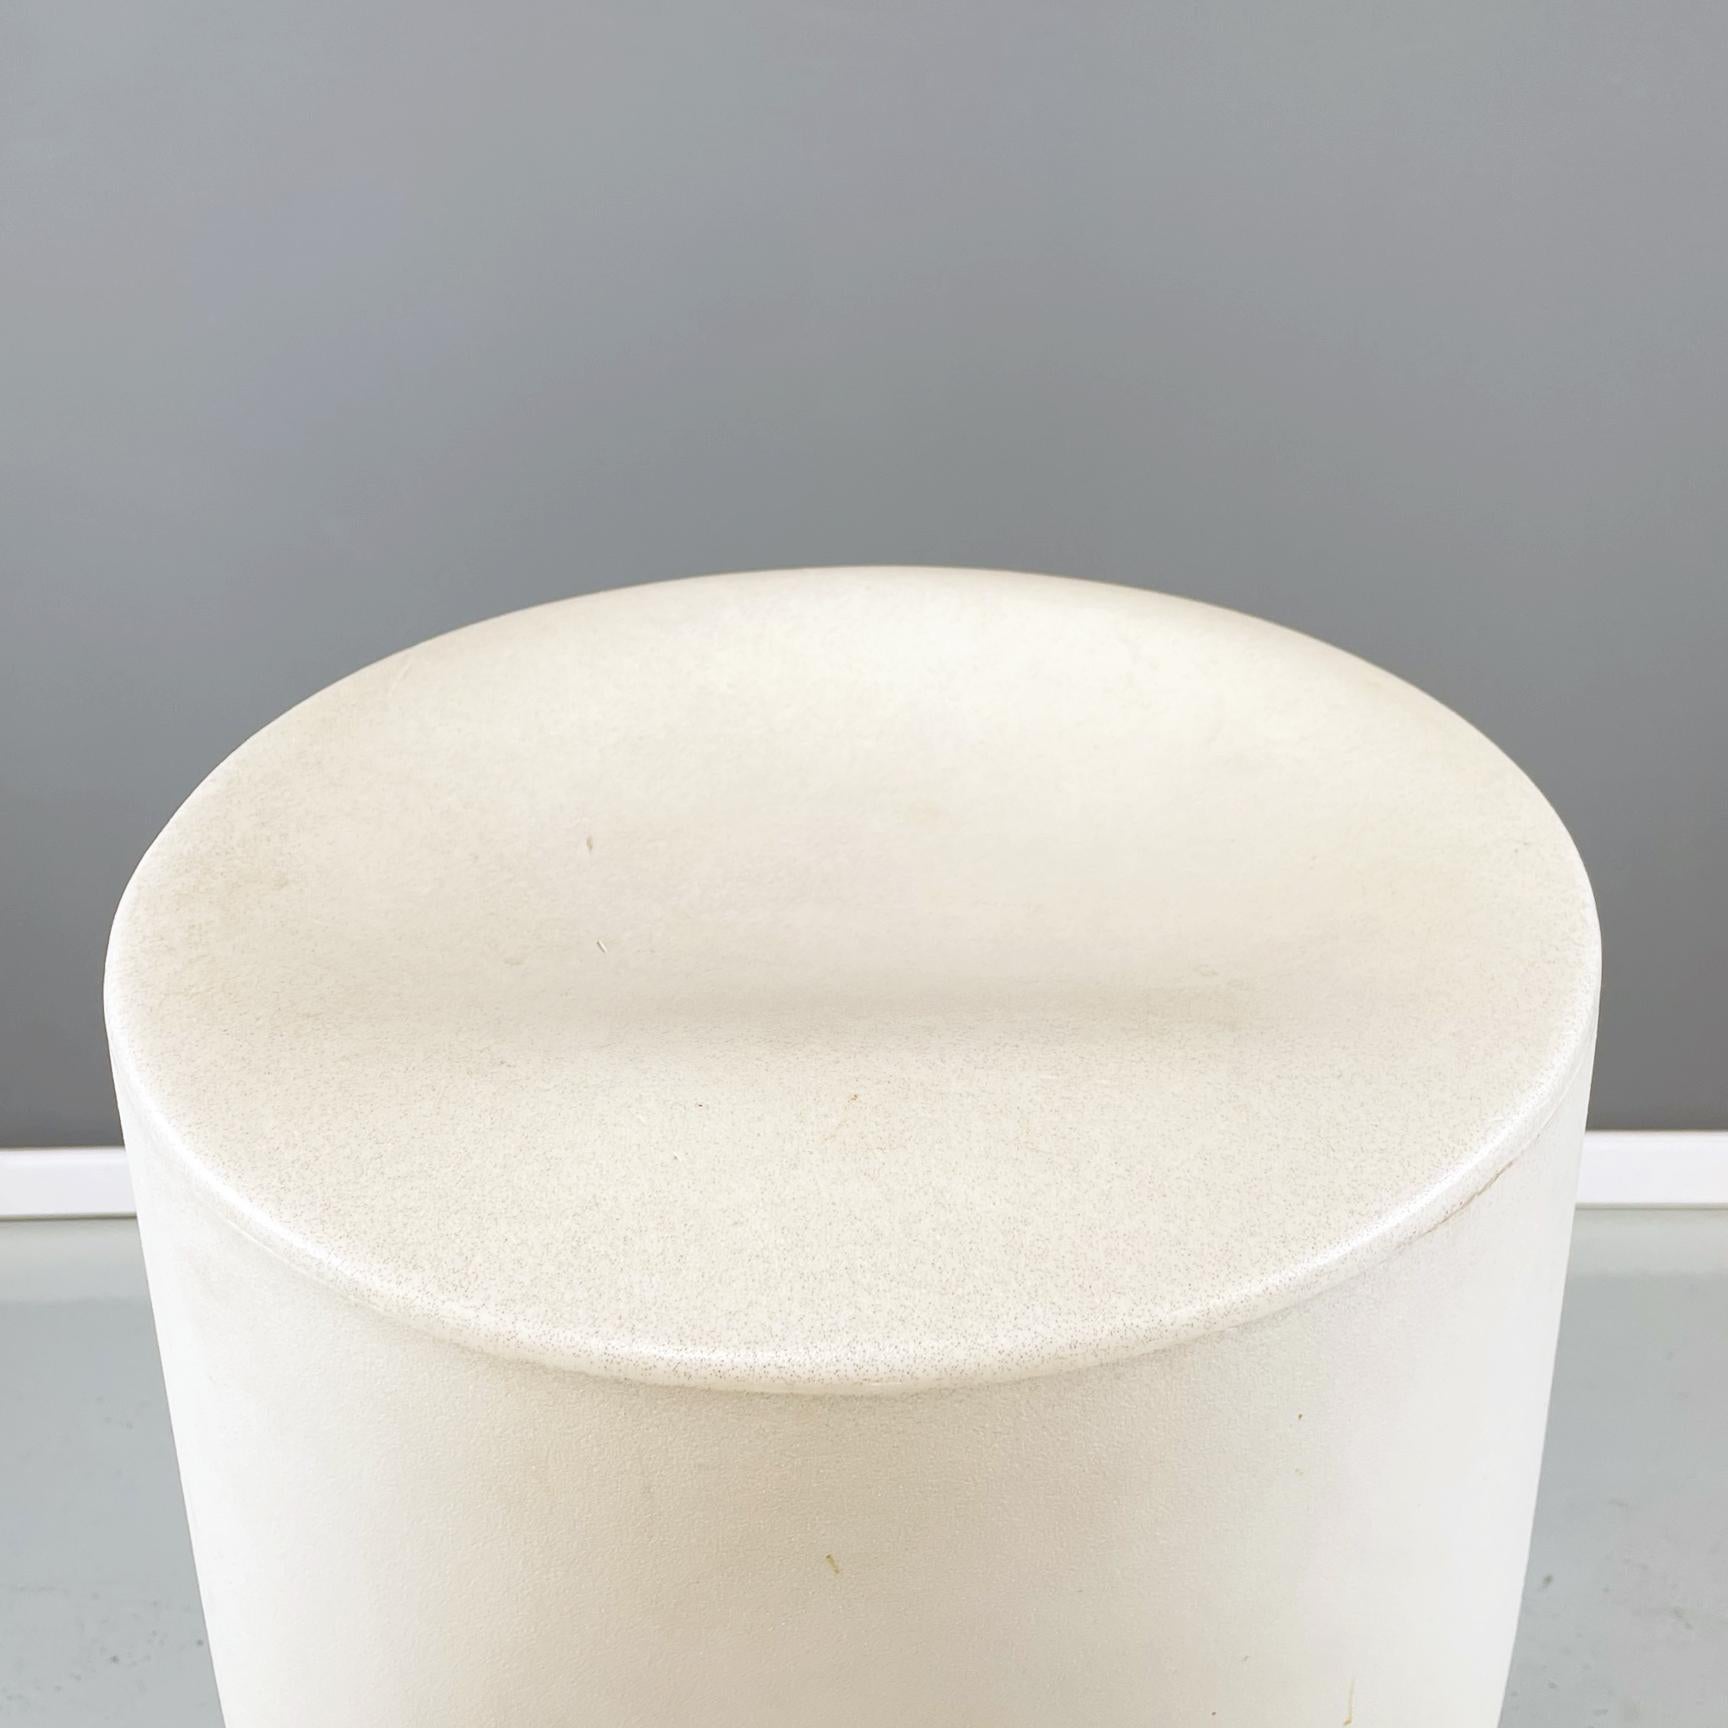 Contemporary Italian Post Modern White Plastic Stool Tokyo Pop by Yoshioka Driade, 2000s For Sale